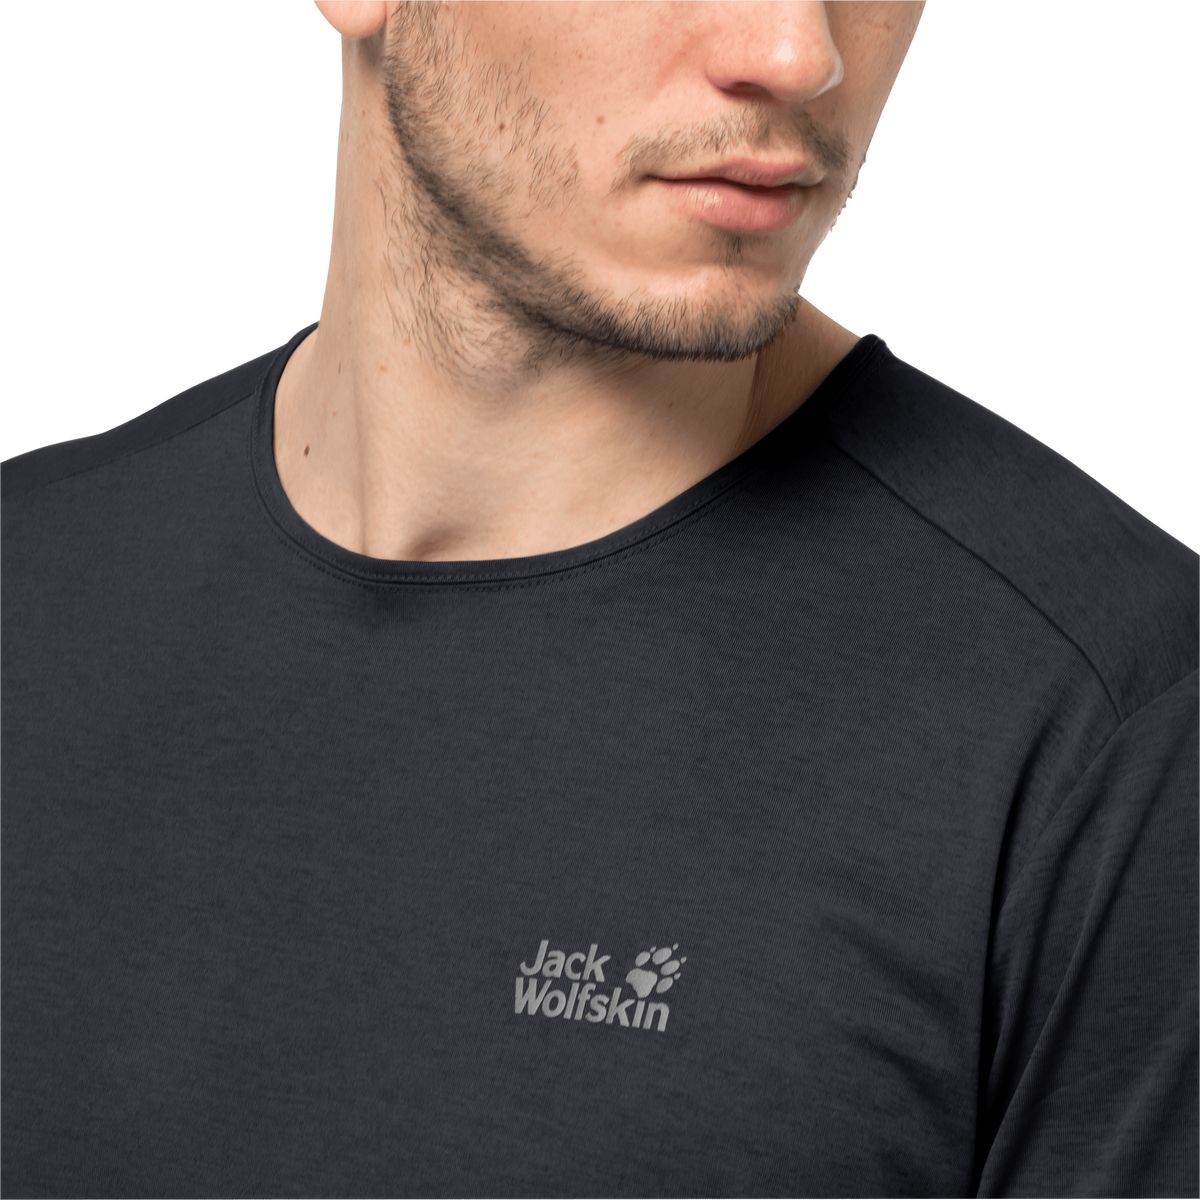 Jack Wolfskin Pack & Go Herren T-Shirt_2